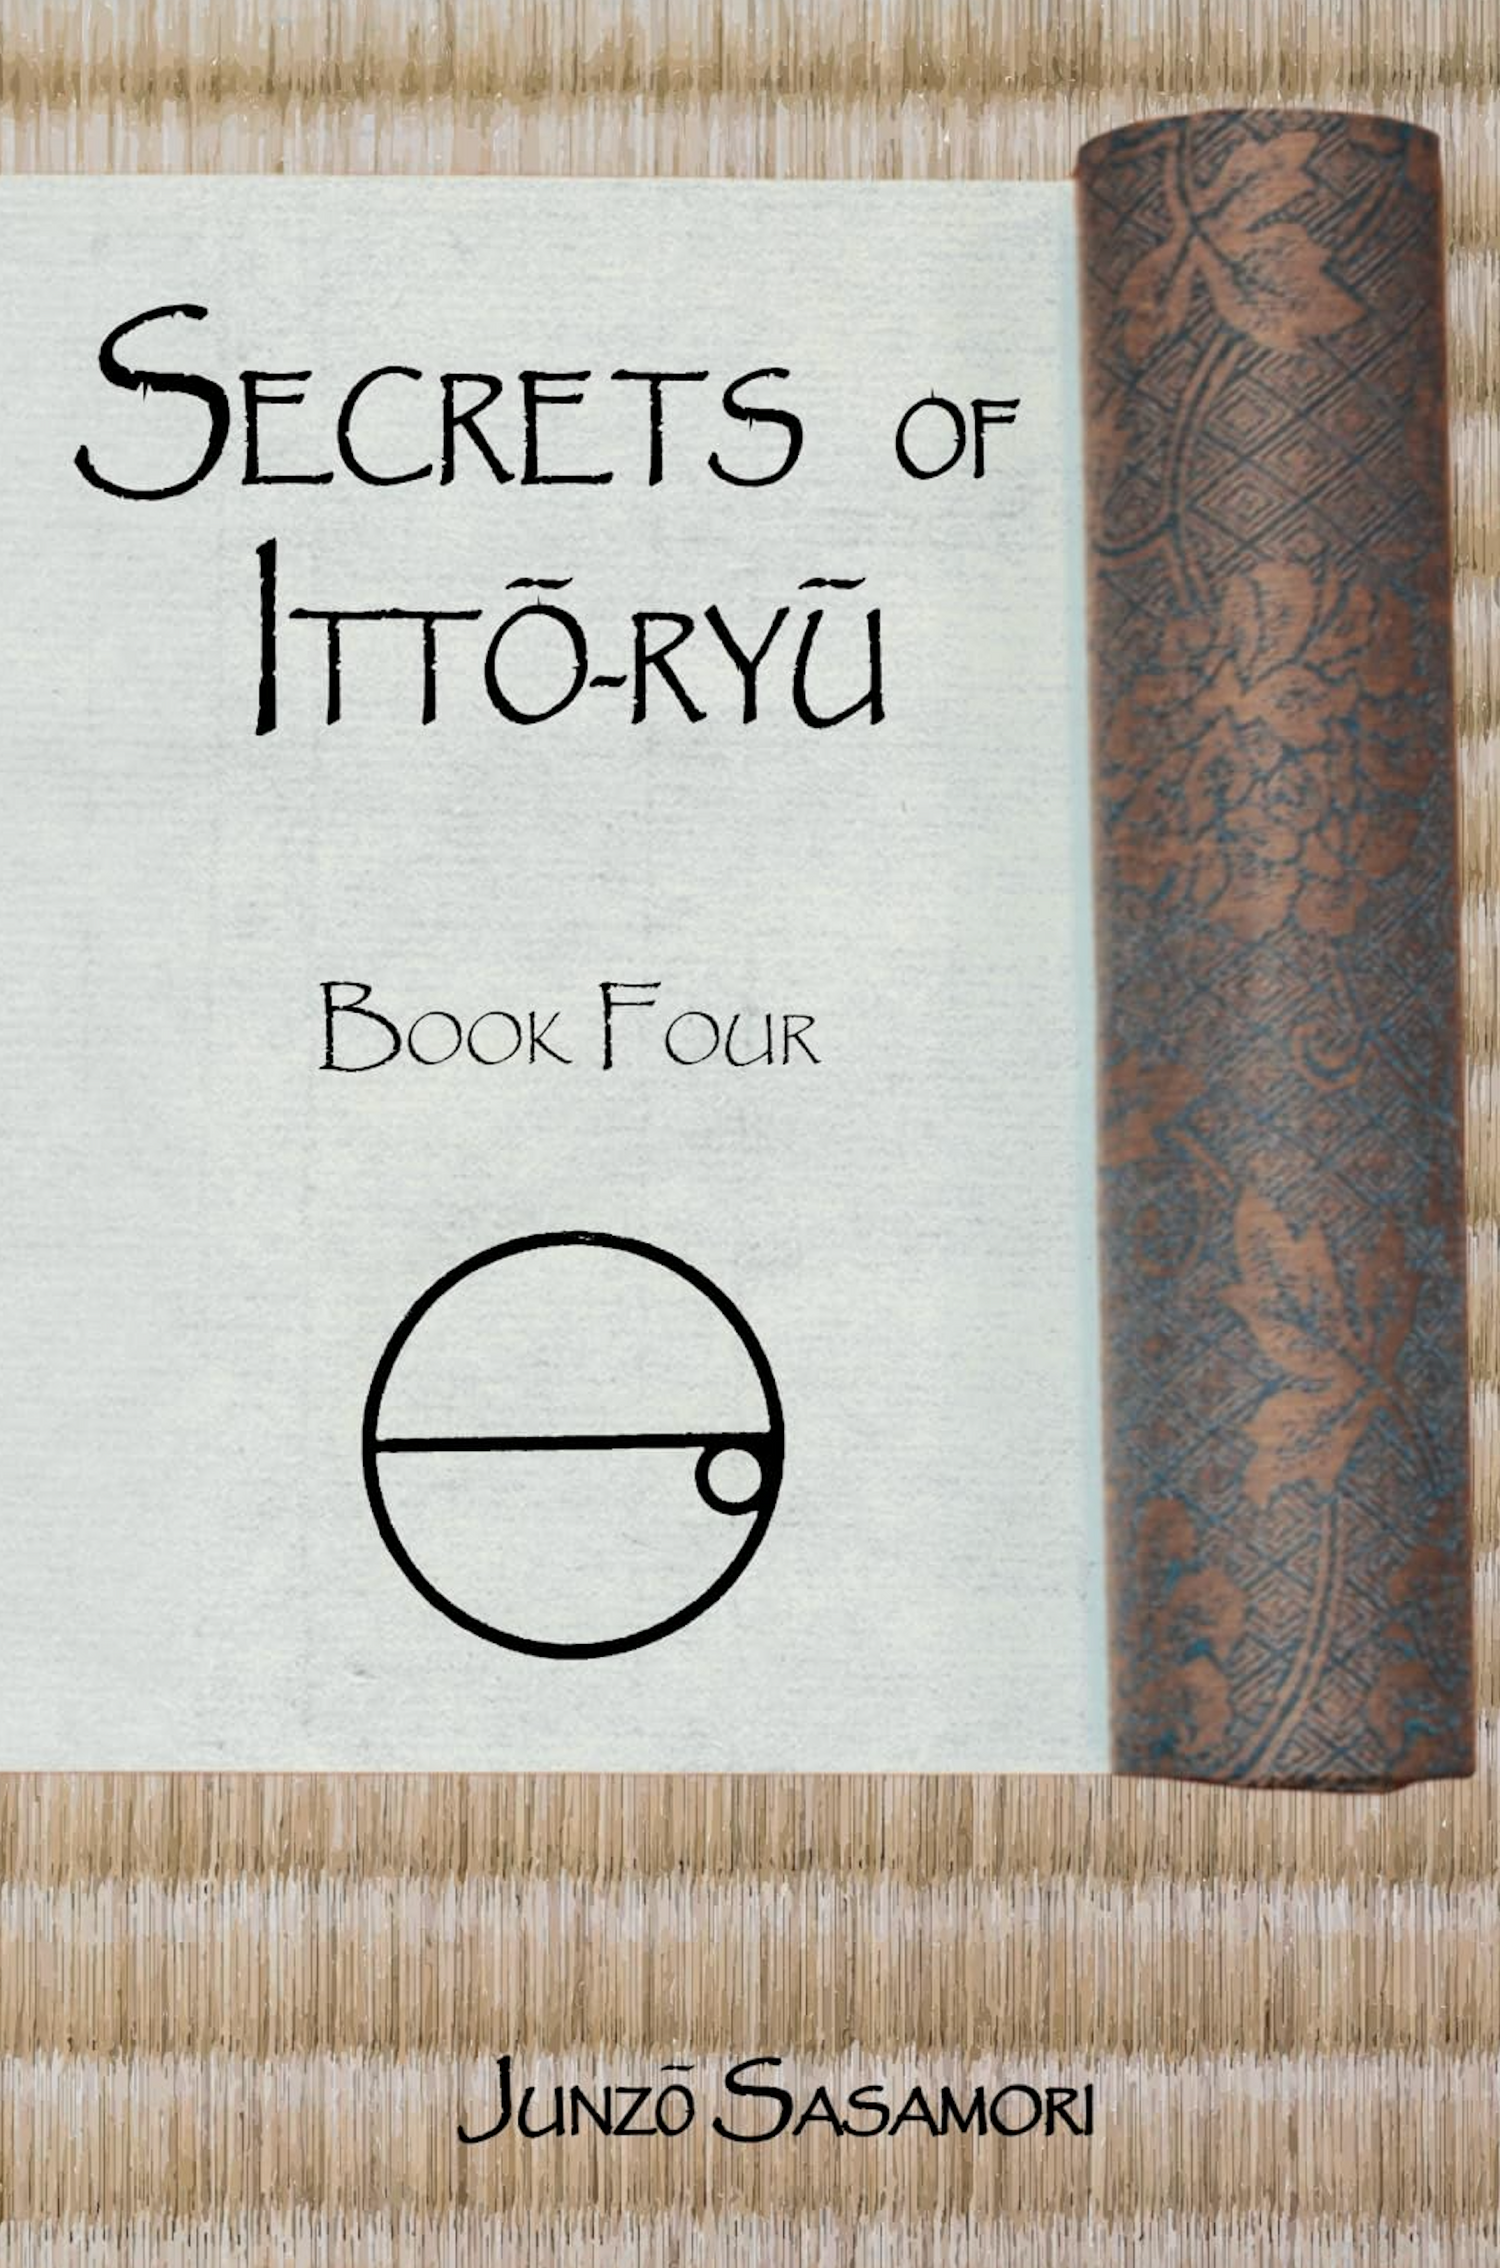 Secrets of Itto Ryu: Book Four by Junzo Sasamori